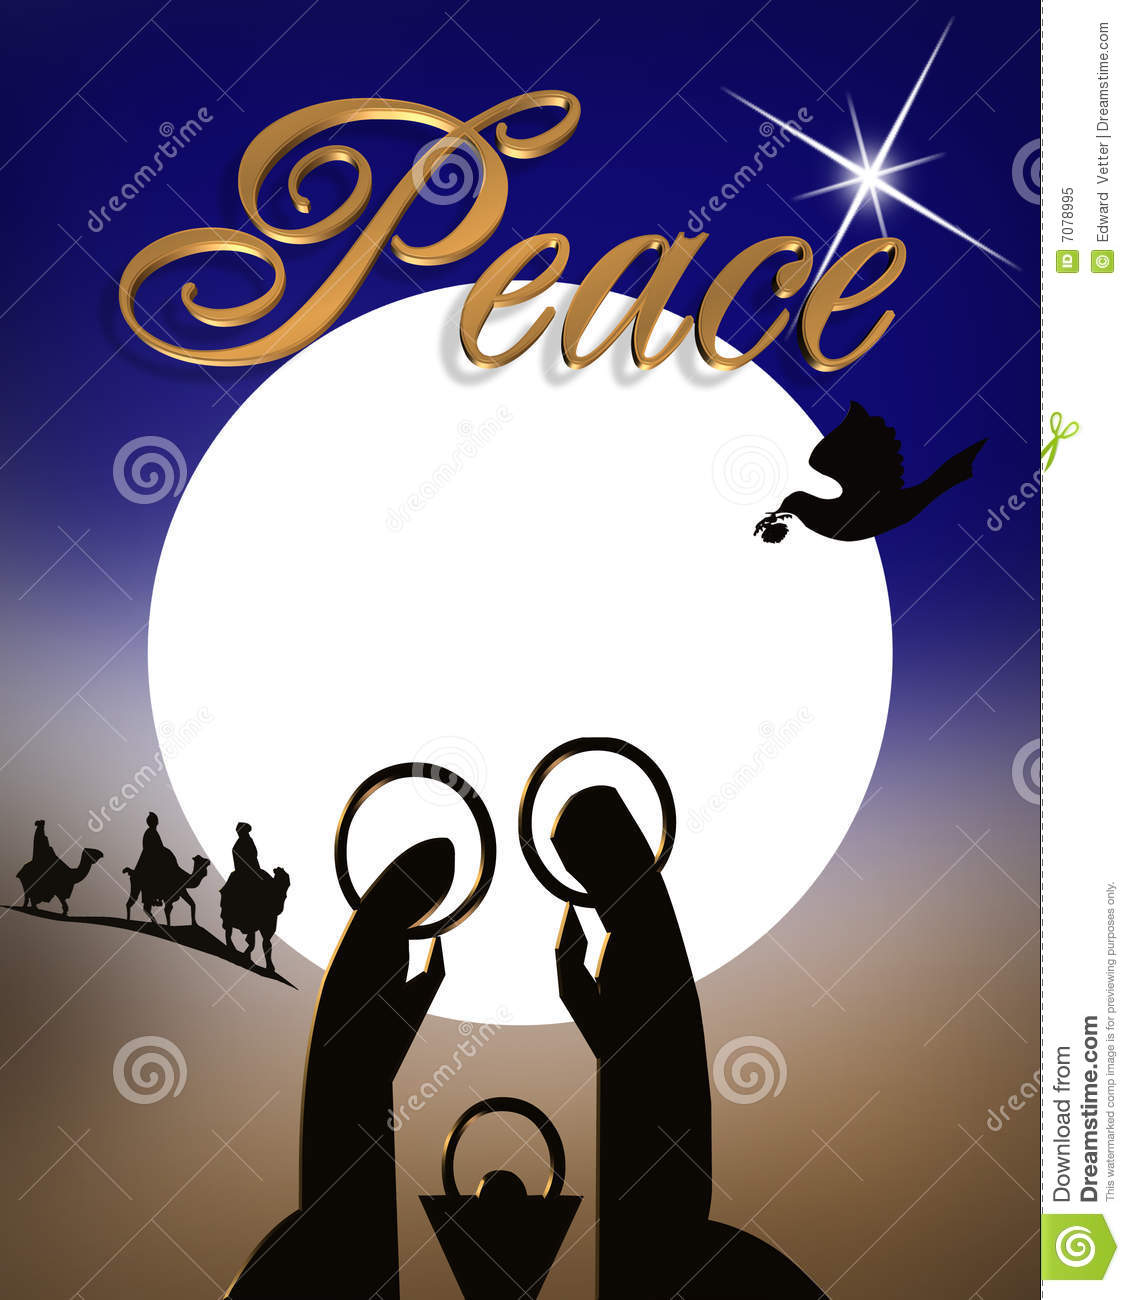 Christmas Nativity Religious Abstract Royalty Free Stock Photo   Image